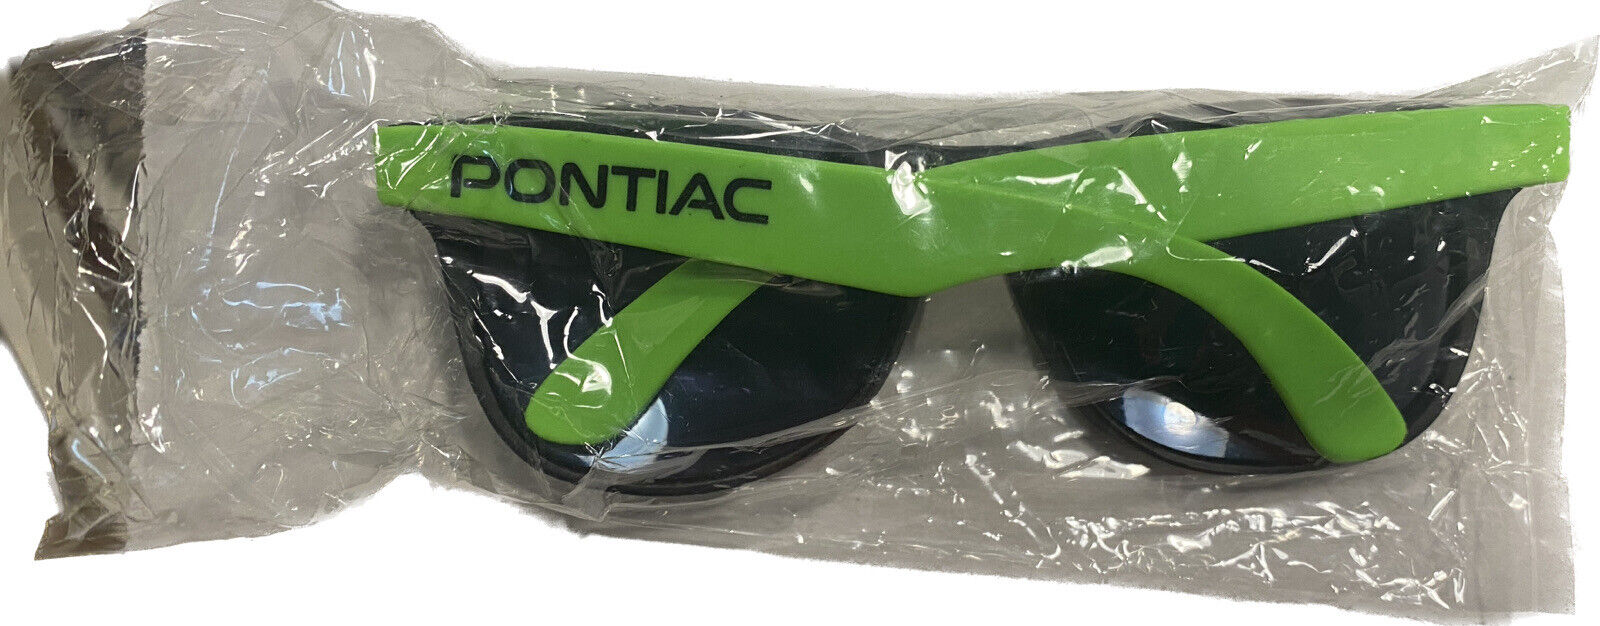 VTG Pontiac Promotional UV Sunglasses Neon Green, New Sealed, 1990’s A